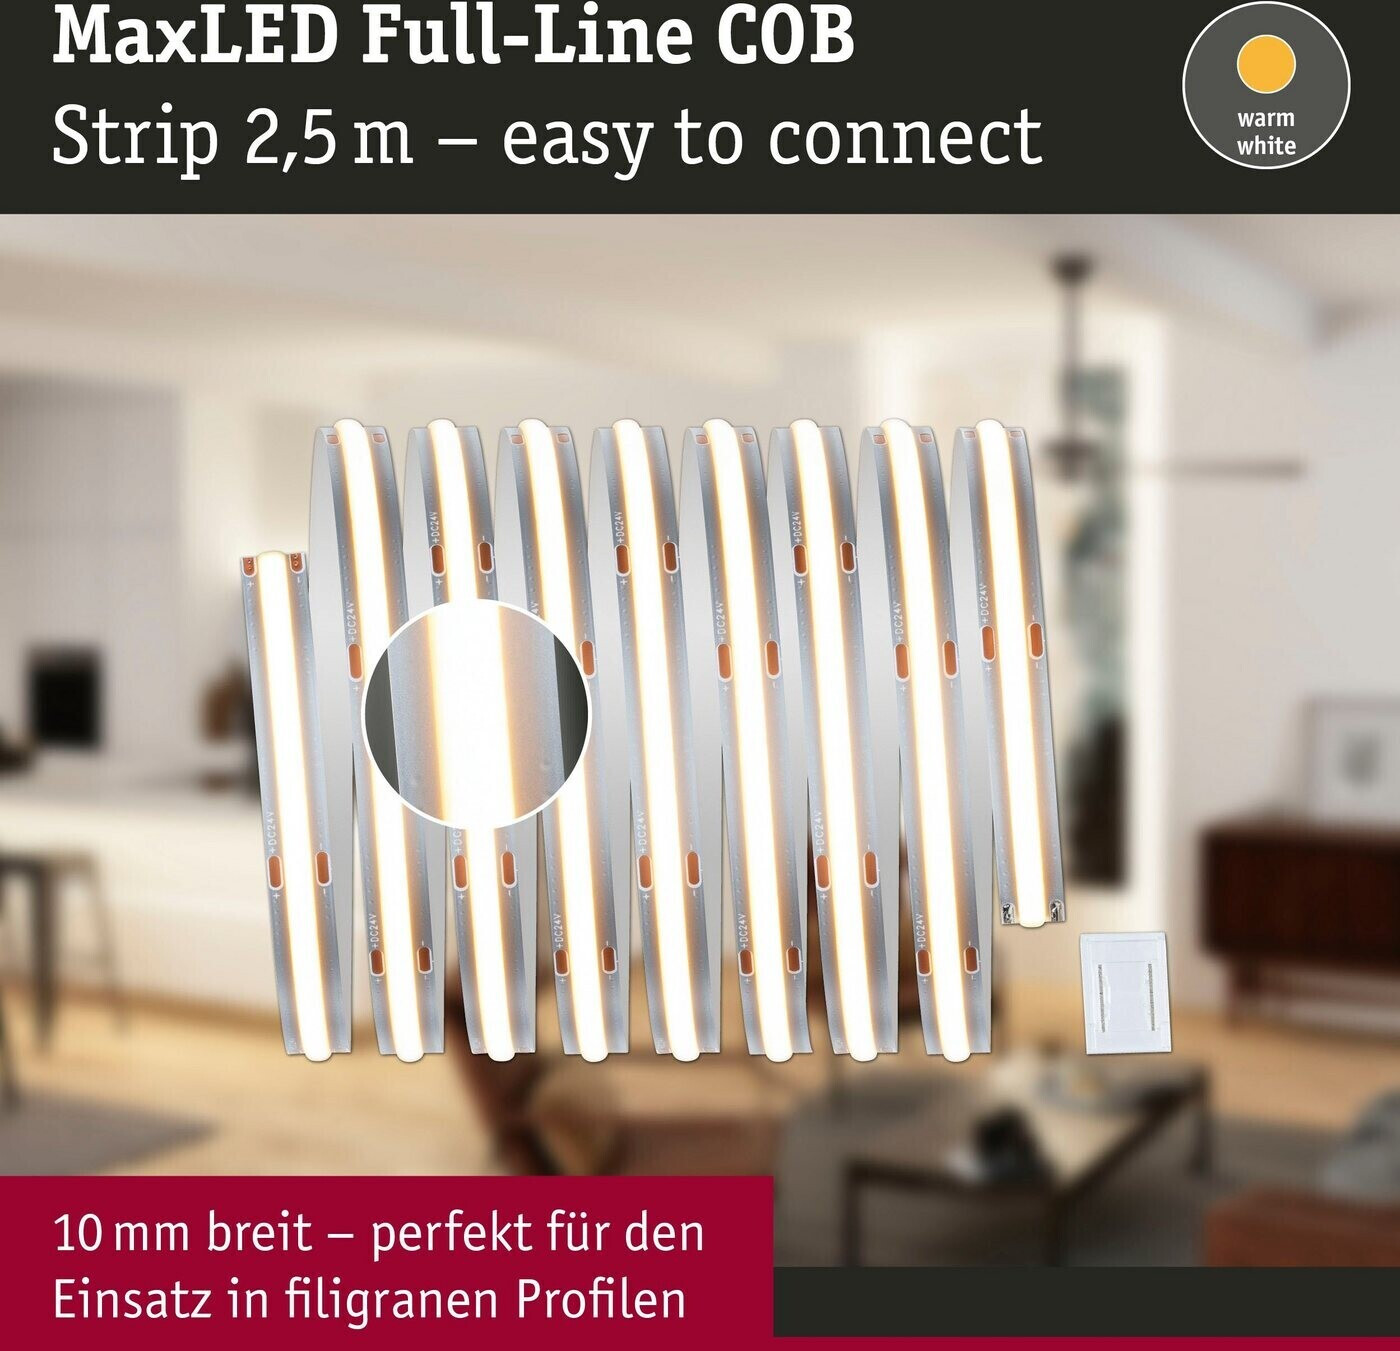 Paulmann MaxLED 500 LED Stripe Einzelstripe | Preisvergleich 2,5m (71047) COB Full-Line bei 19,55 ab €